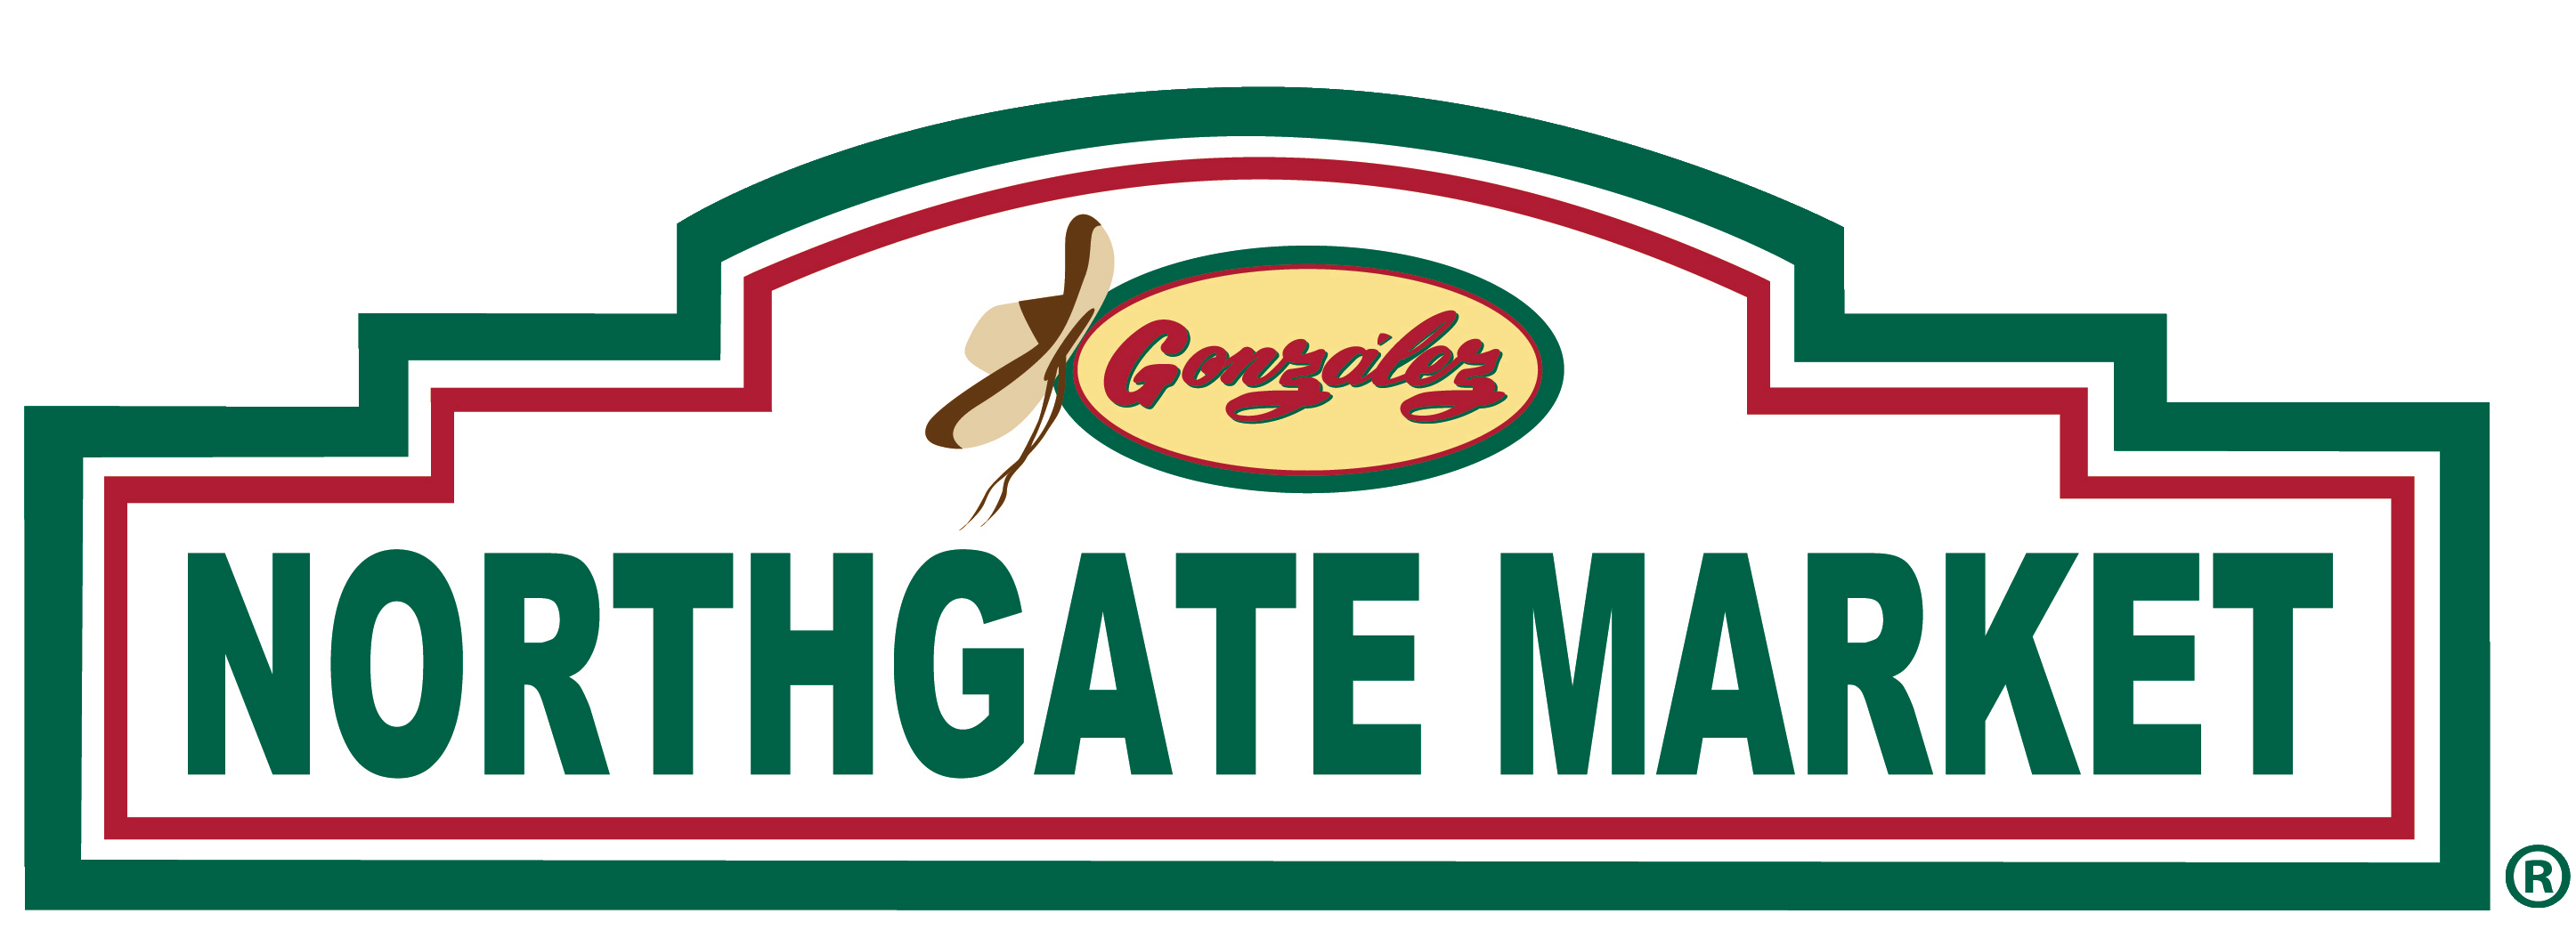 northgate logo